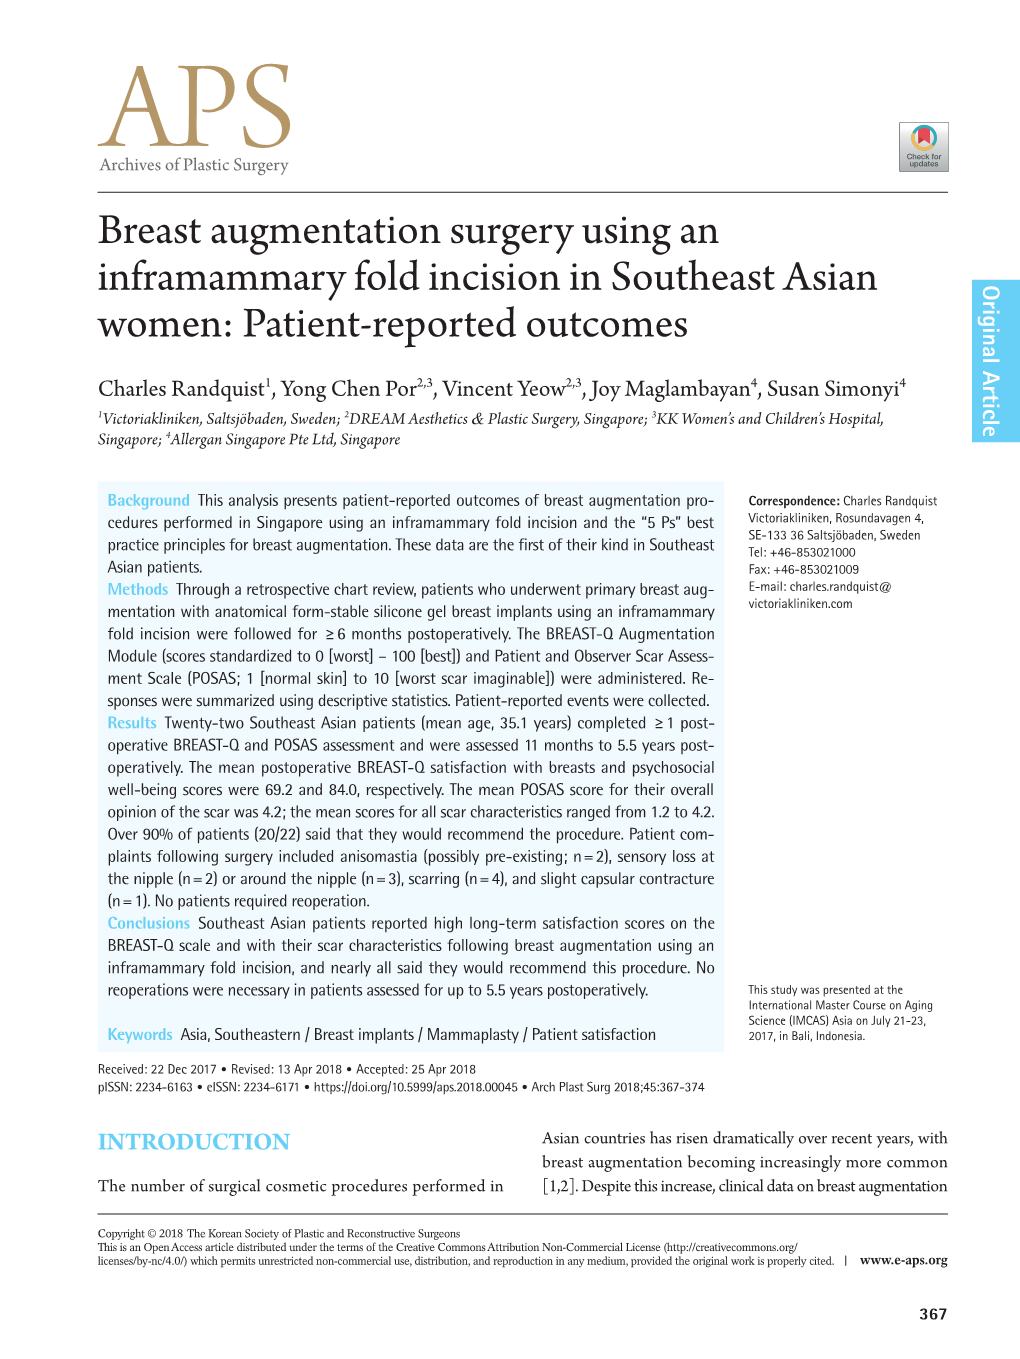 Breast Augmentation Surgery Using an Inframammary